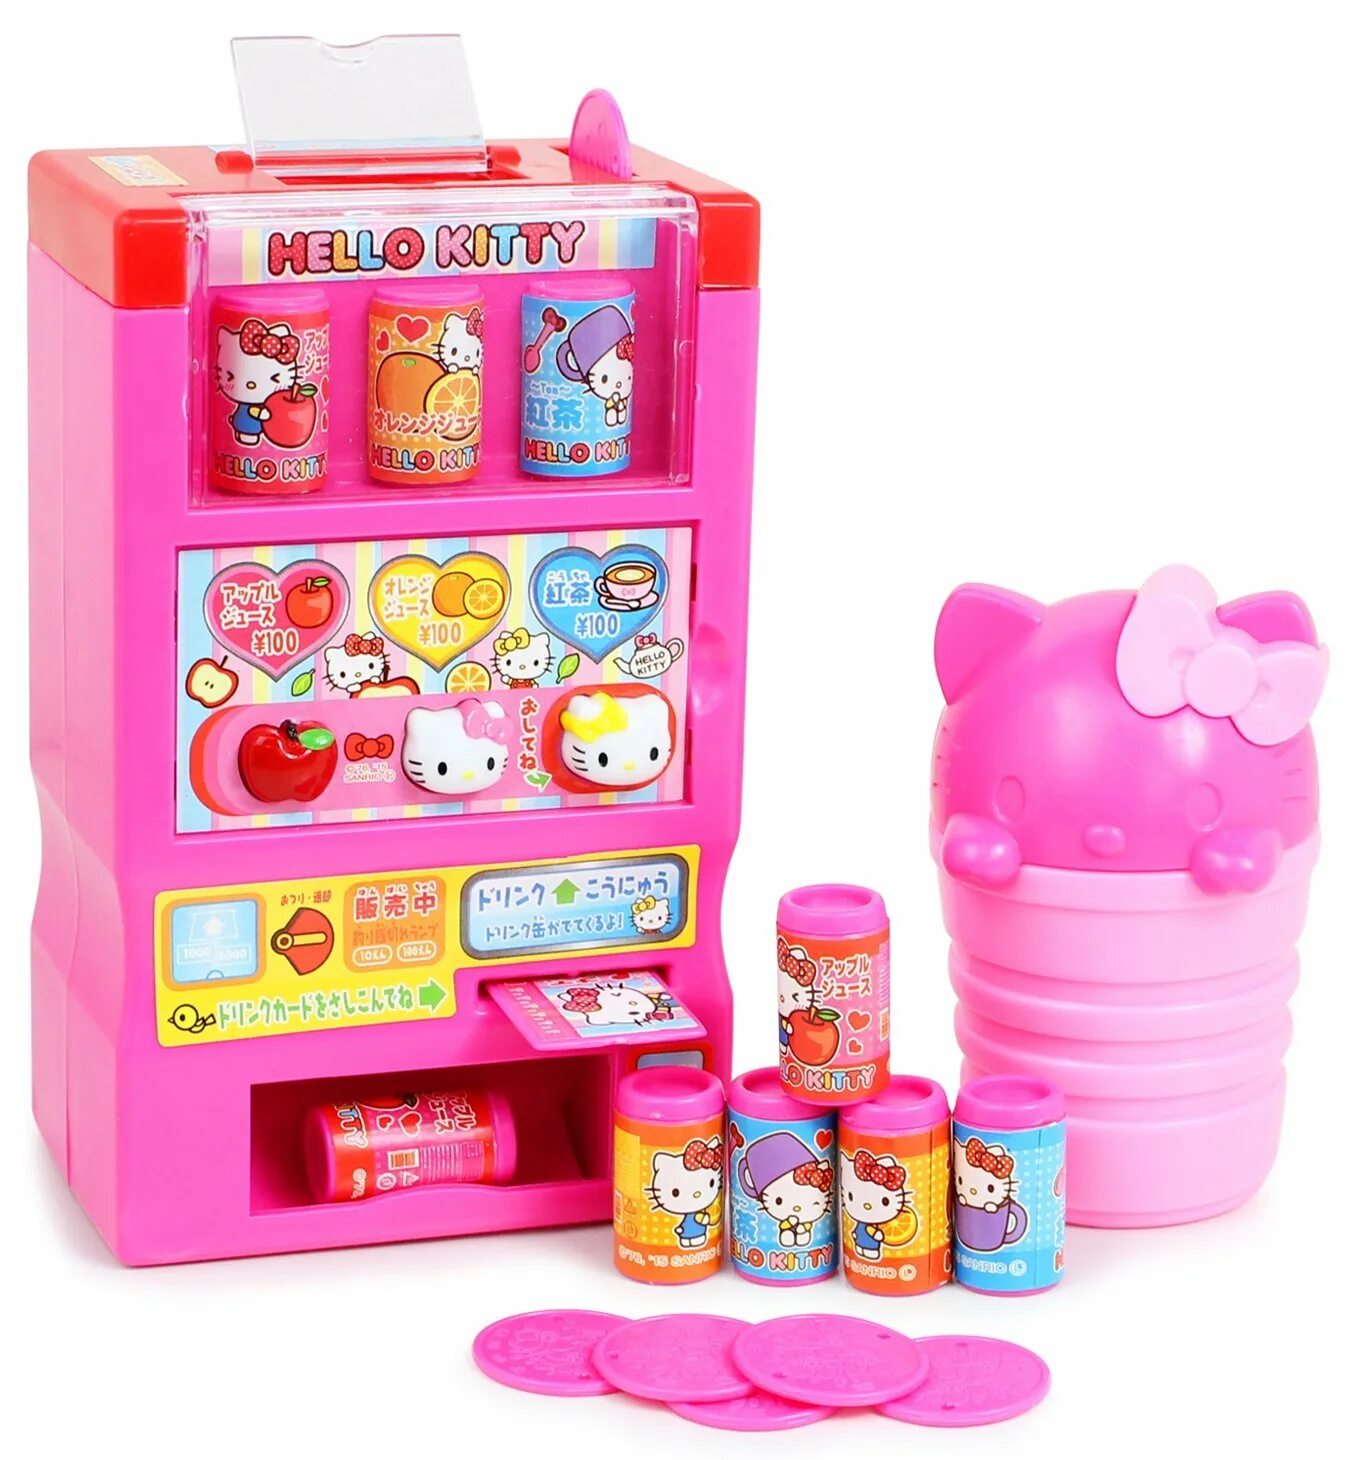 Игрушка автомат с напитками. Hello Kitty автомат с напитками. Аппарат для выдачи игрушек. Сладости hello Kitty. Import hello